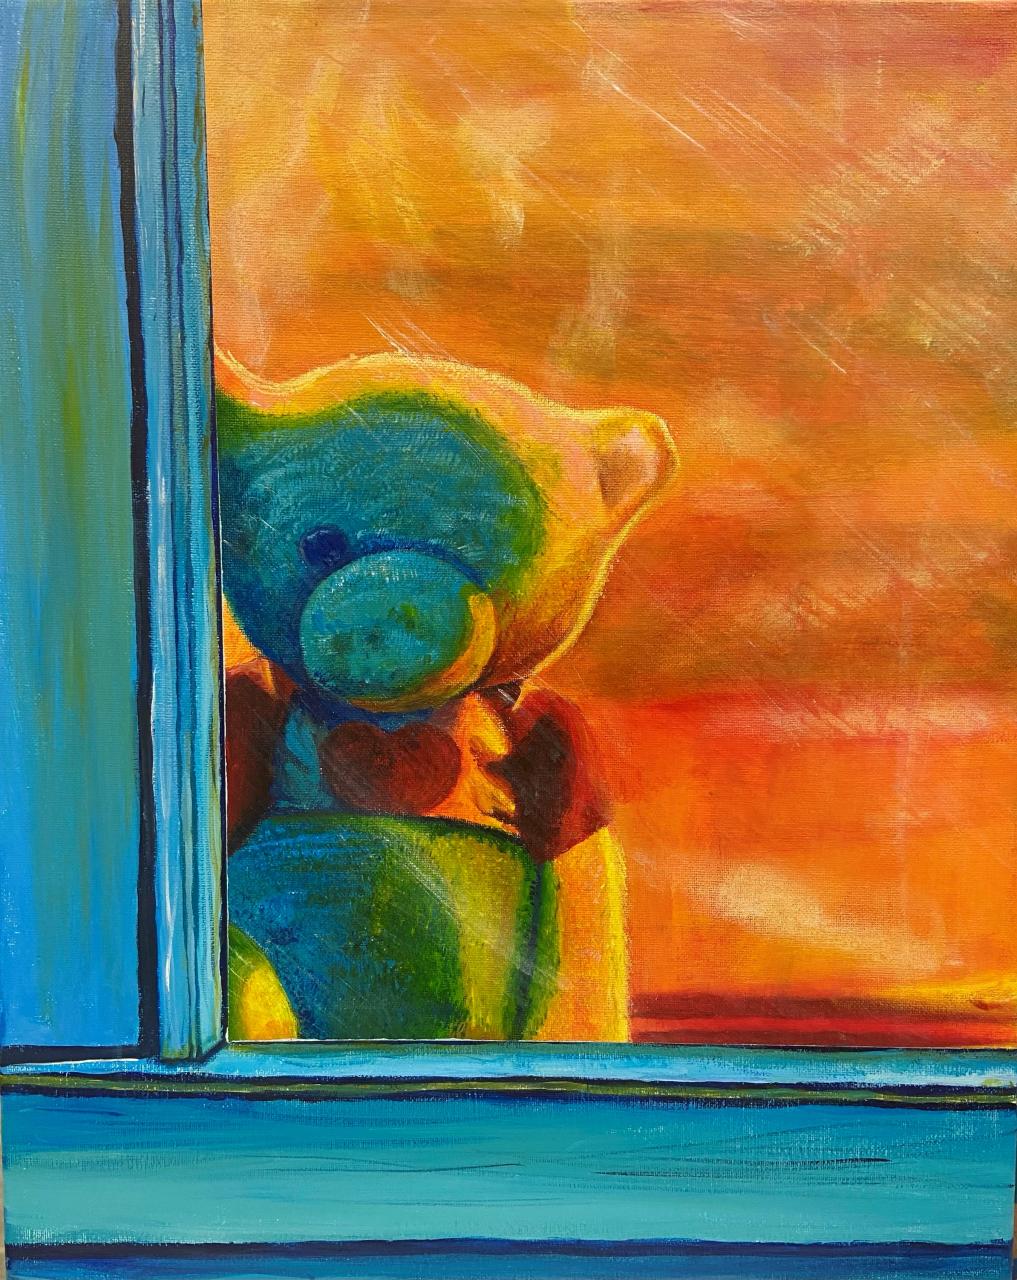 Painting of teddy bear in window